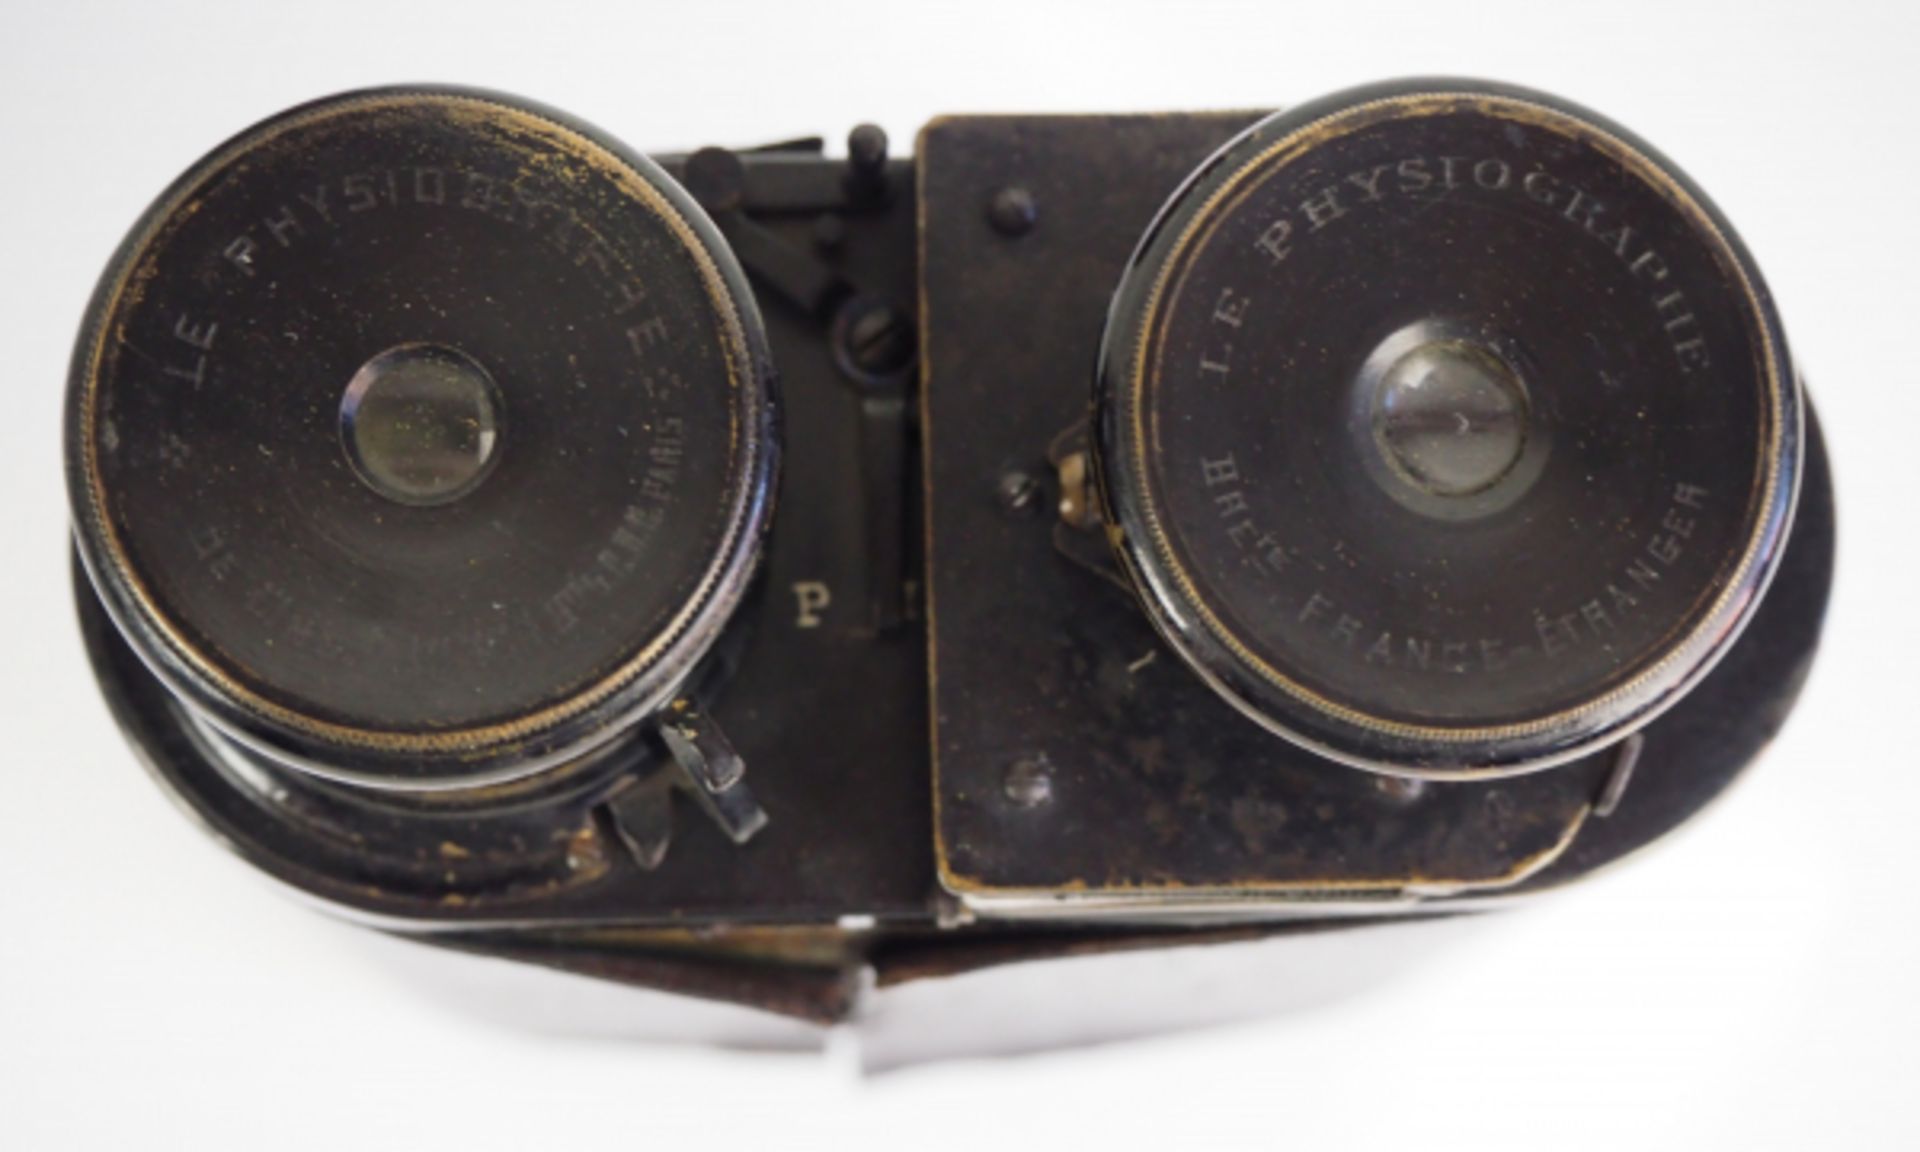 Stereo Fotoapparat.Schwarzes Buntmetallgehäuse, graviert Le Physiographe de l'Ing B. Paris, in - Bild 3 aus 3